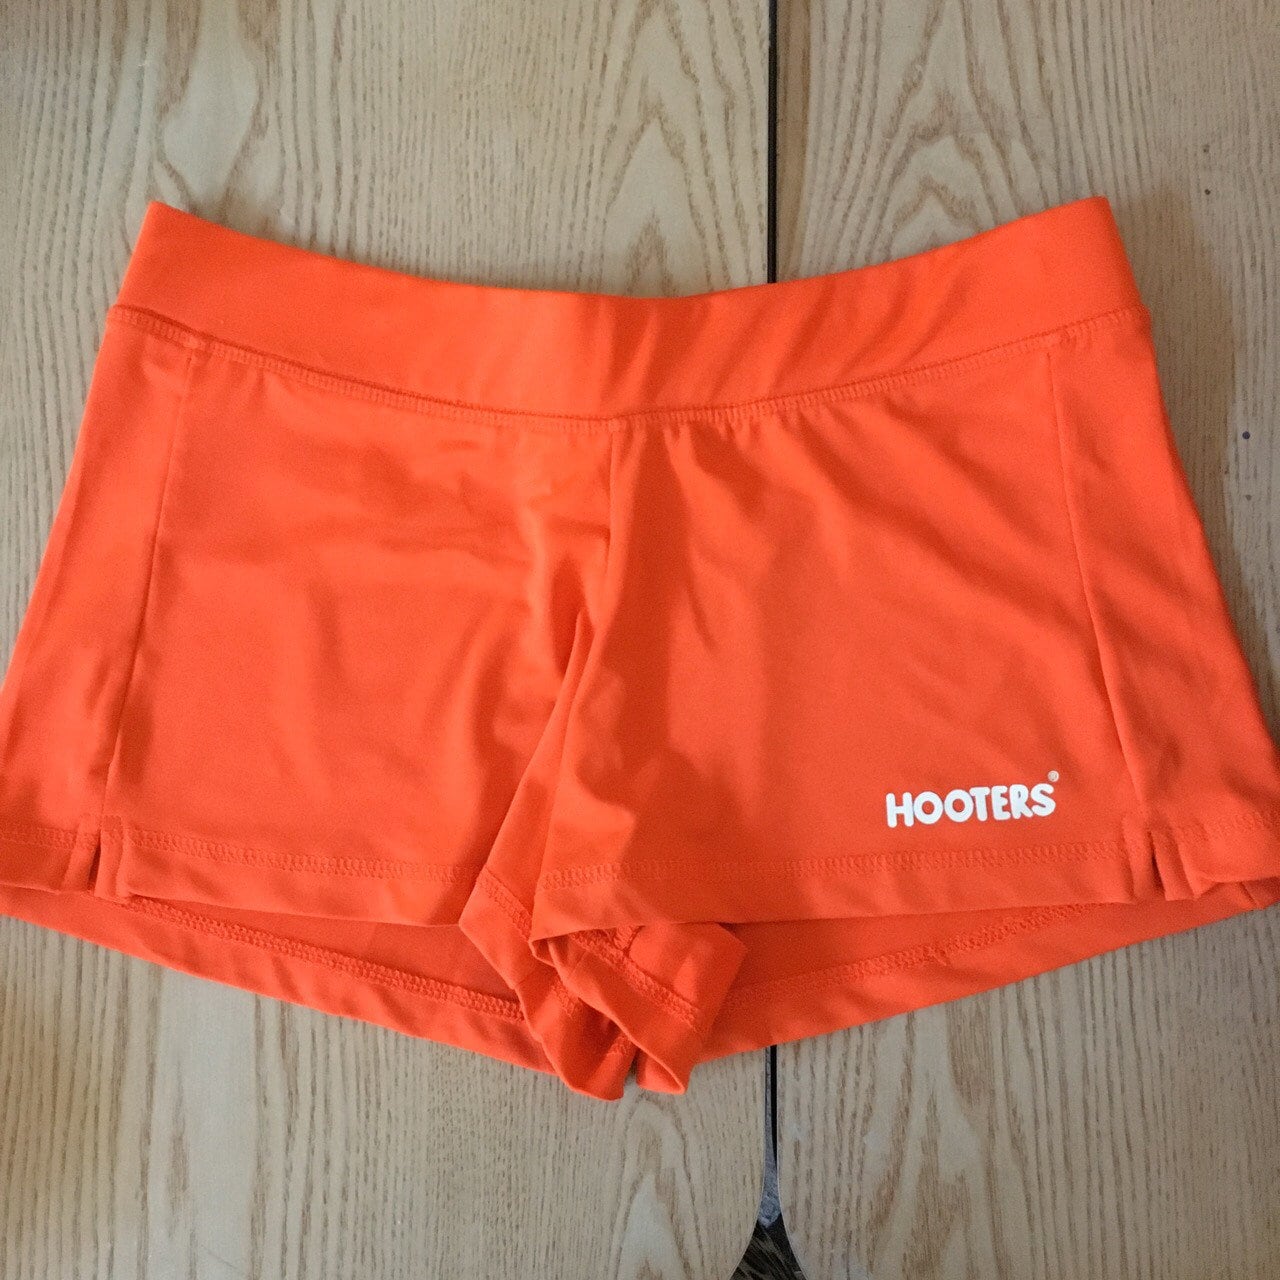 New Sexy Hooters Girl Uniform Shorts Stretchy Size Medium -  Canada